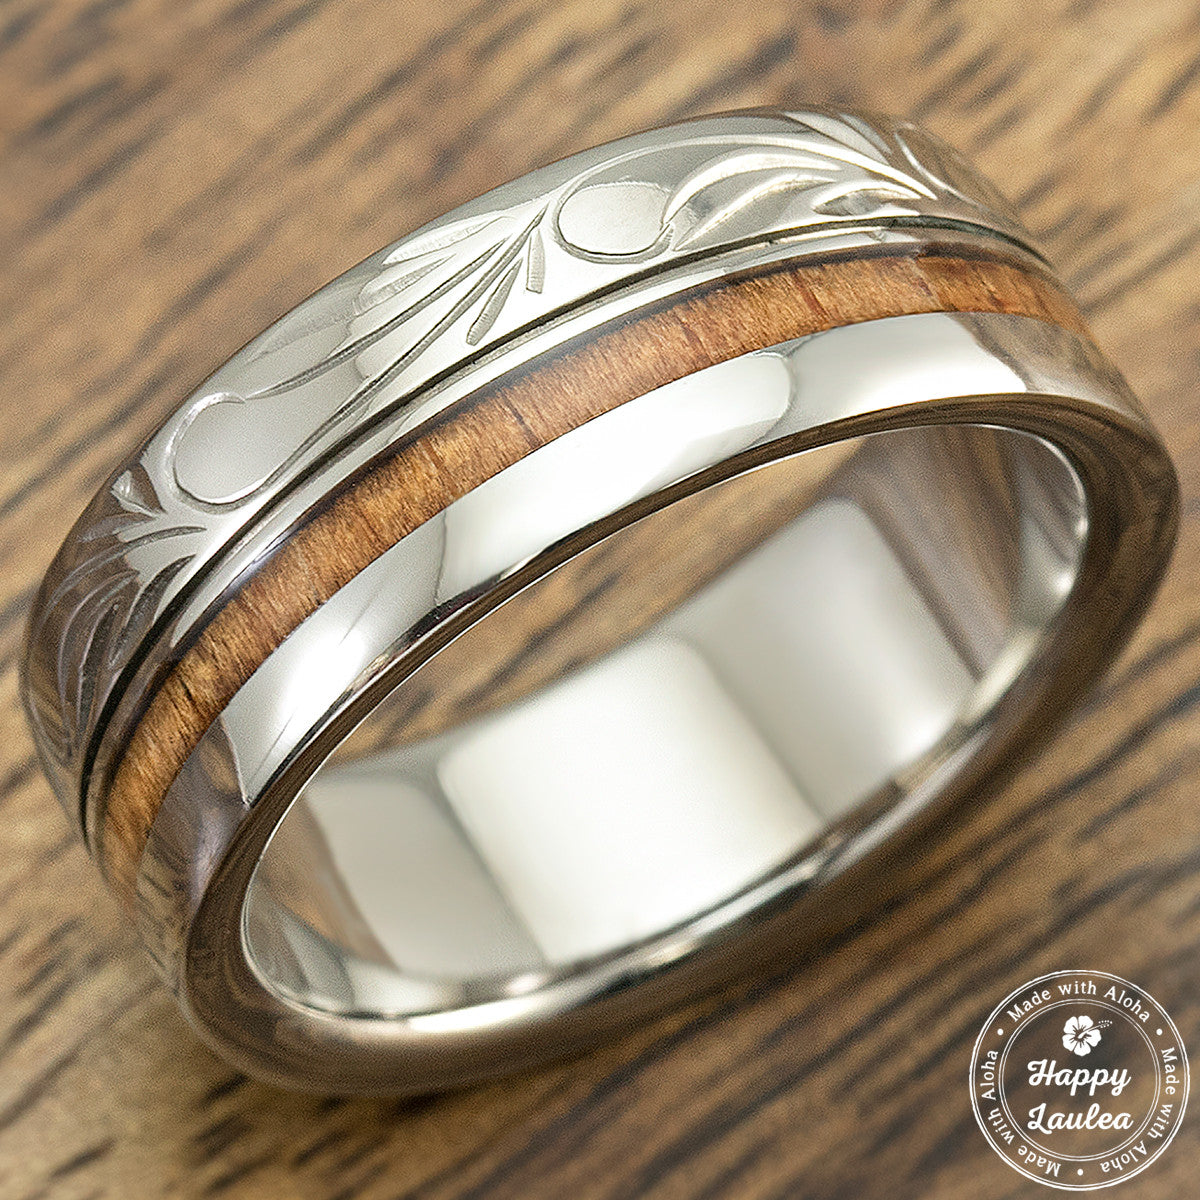 Titanium Ring with Hawaiian Koa Wood Inlay Hand Engraved with Hawaiian Heritage Design - 8mm, Standard Fitment, Flat Shaped